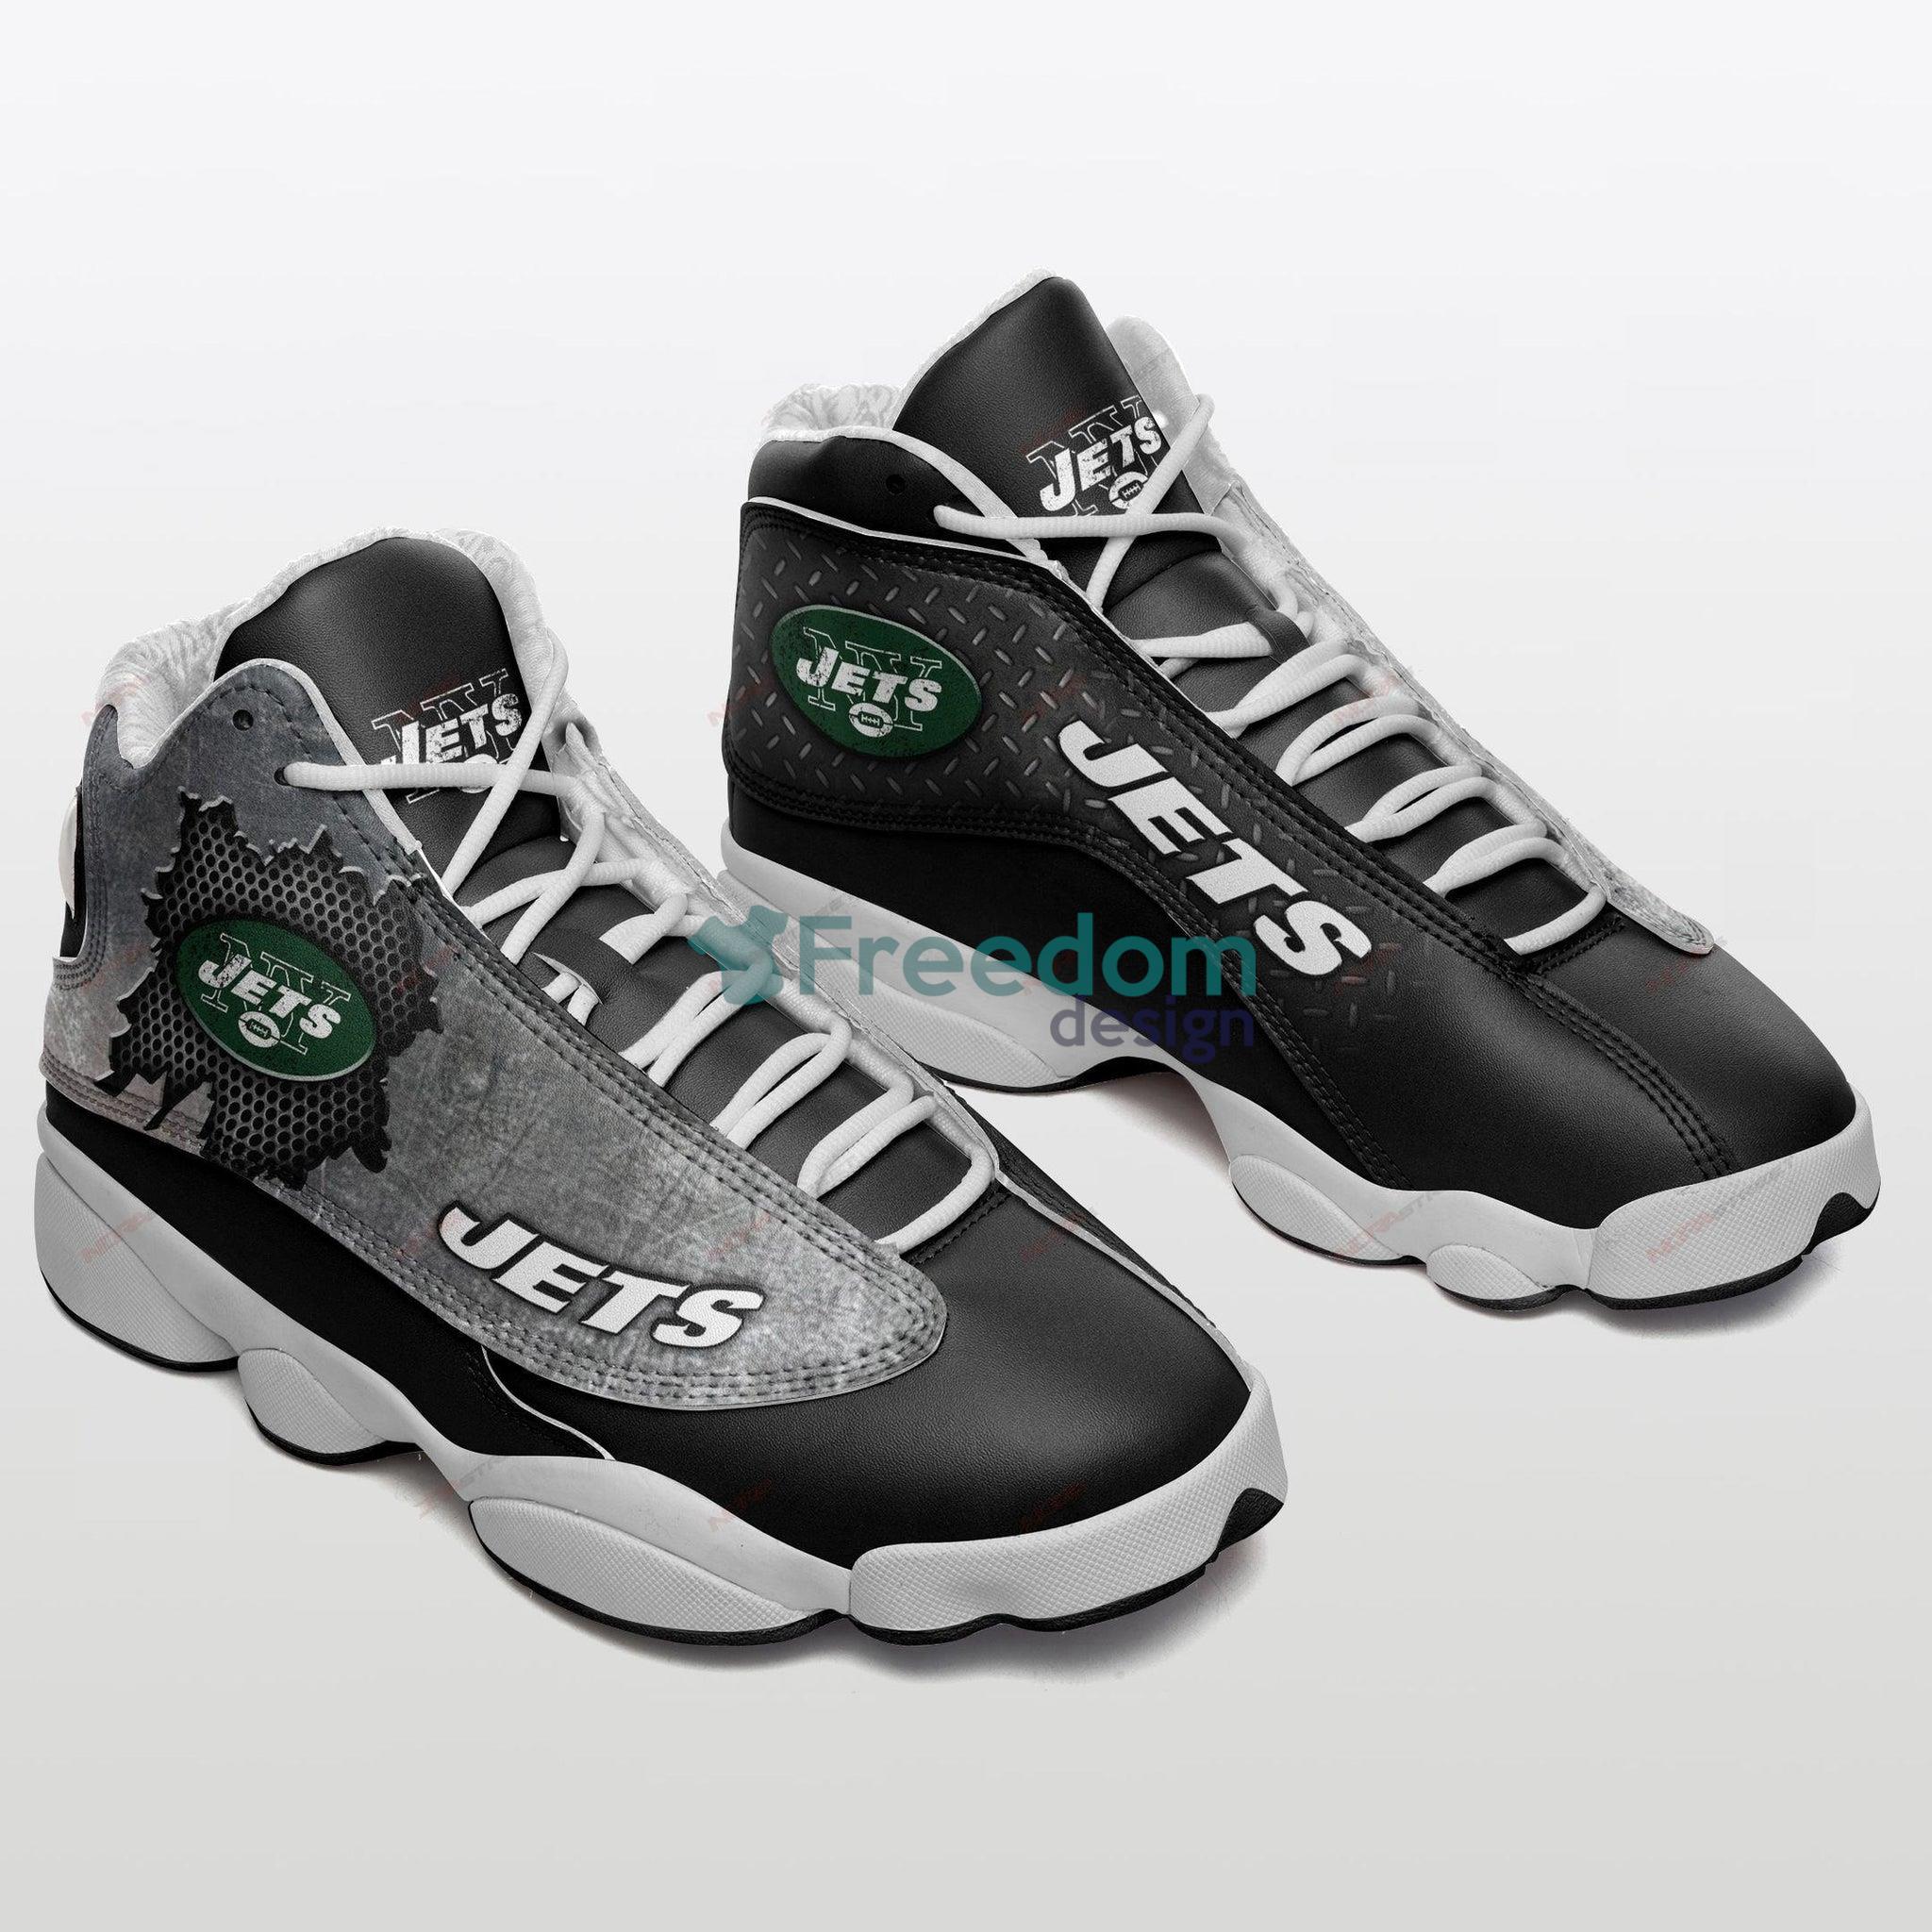 New York Jets Team Air Jordan 13 Shoes For Fans